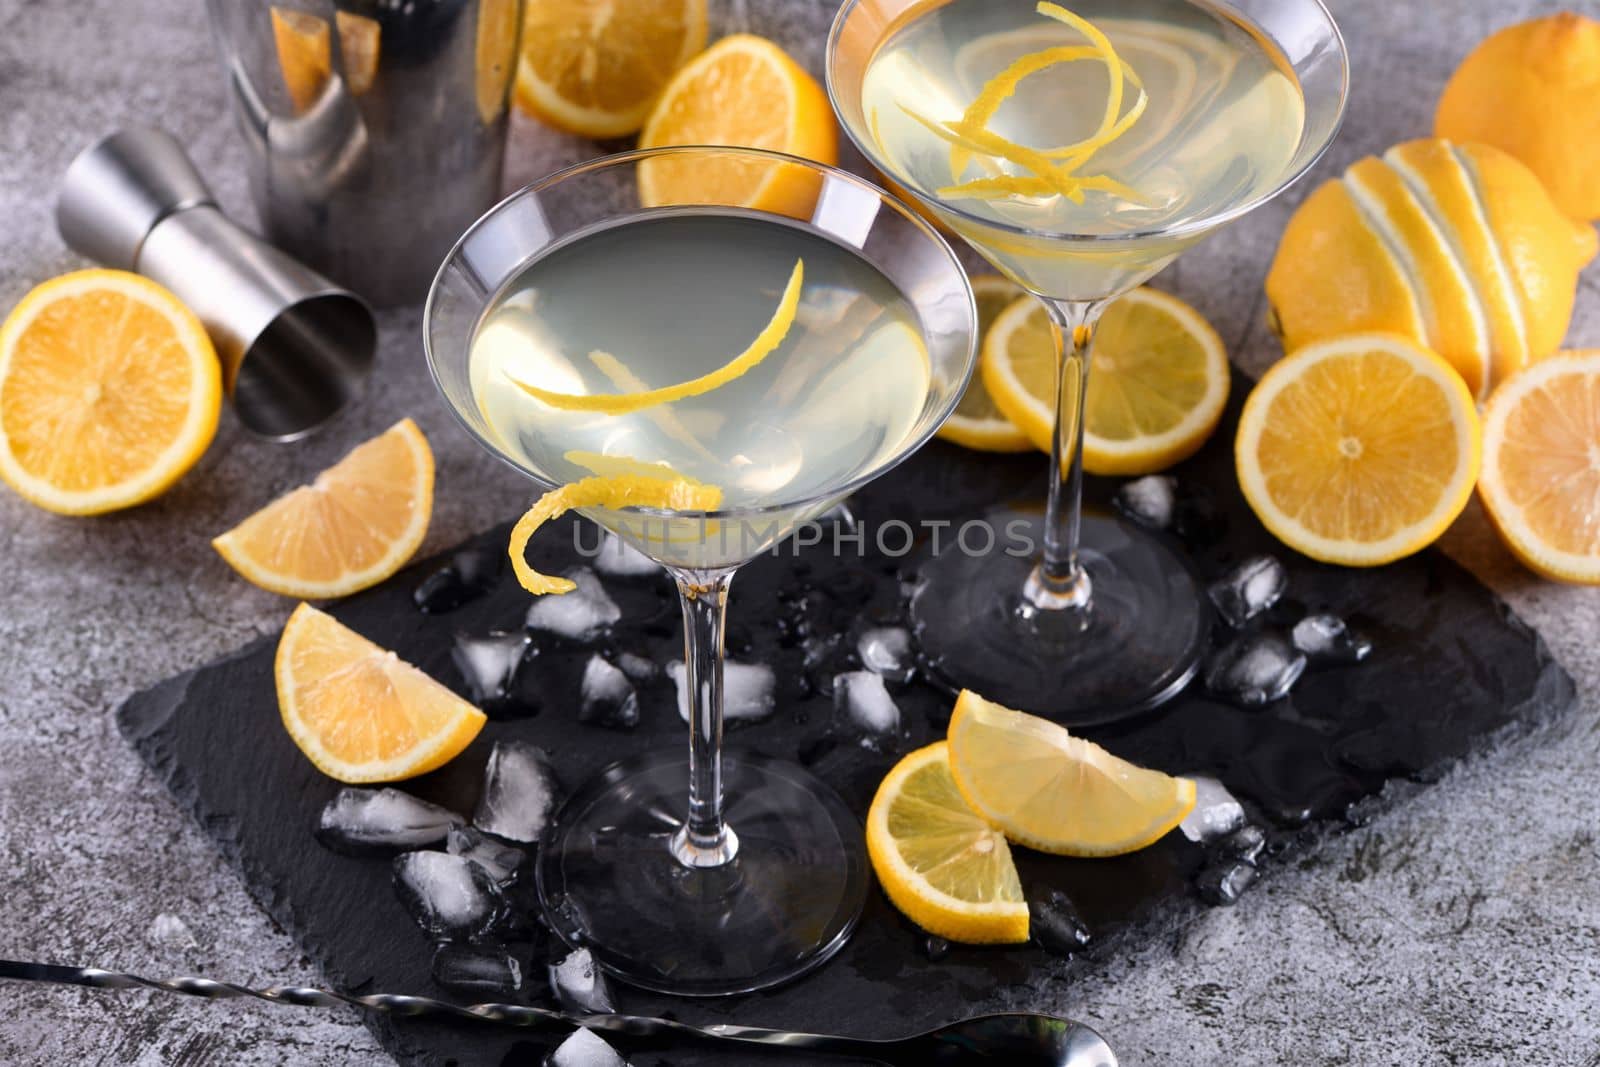 Lemon drop martini with zest offers a sophisticated twist to a cocktail. This light and savory favorite combines vodka, orange liqueur, fresh lemon juice and zest.